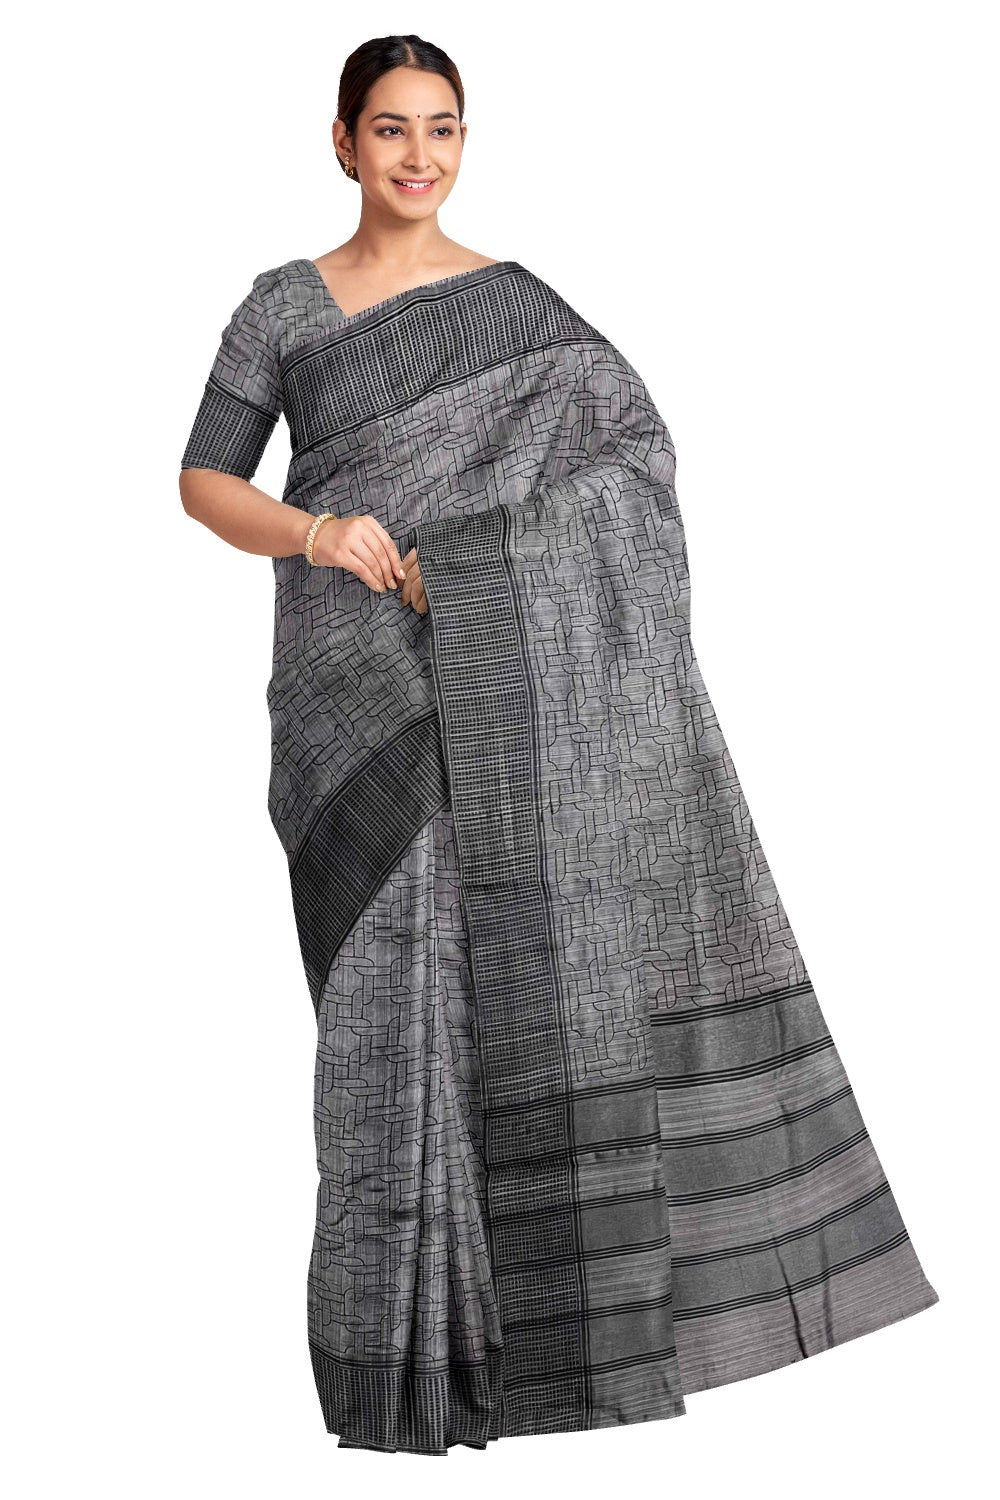 Southloom Grey Semi Tussar Designer Thread Work Saree with Tassels on Pallu